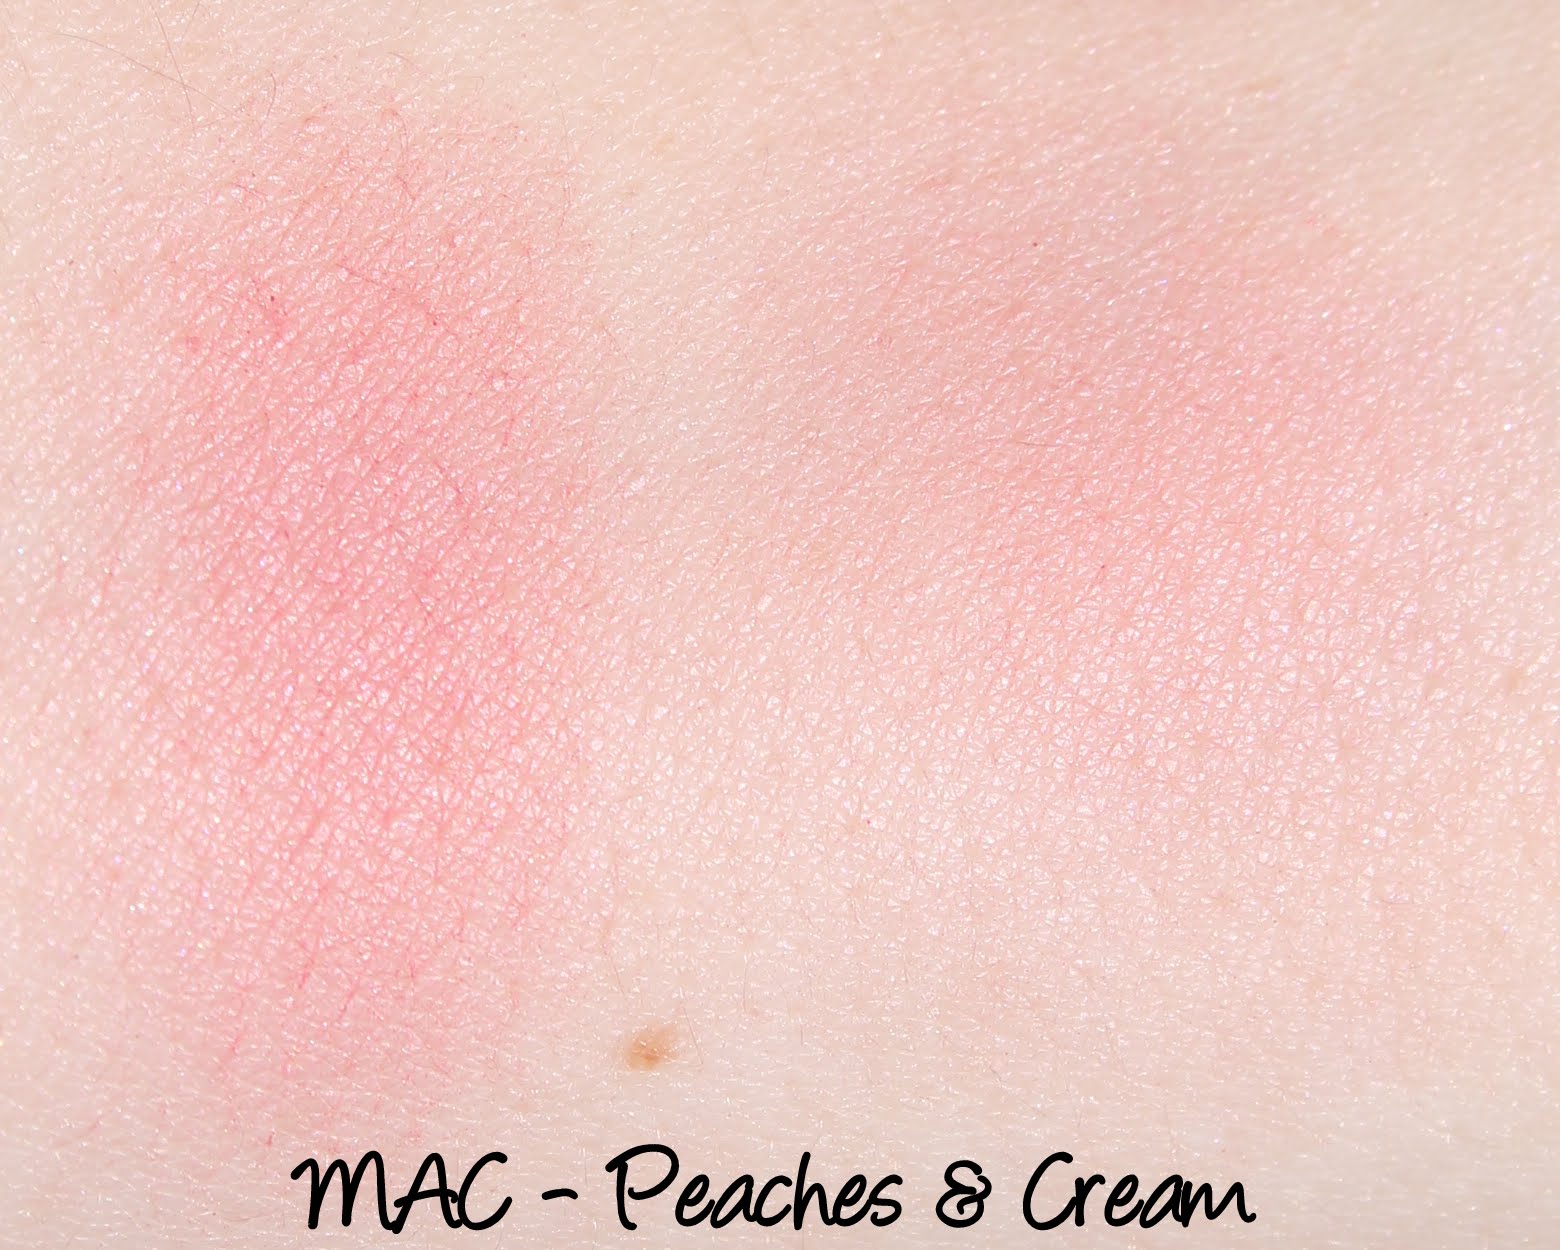 MAC Monday: MAC X Osbournes - Peaches & Cream Swatches & Review